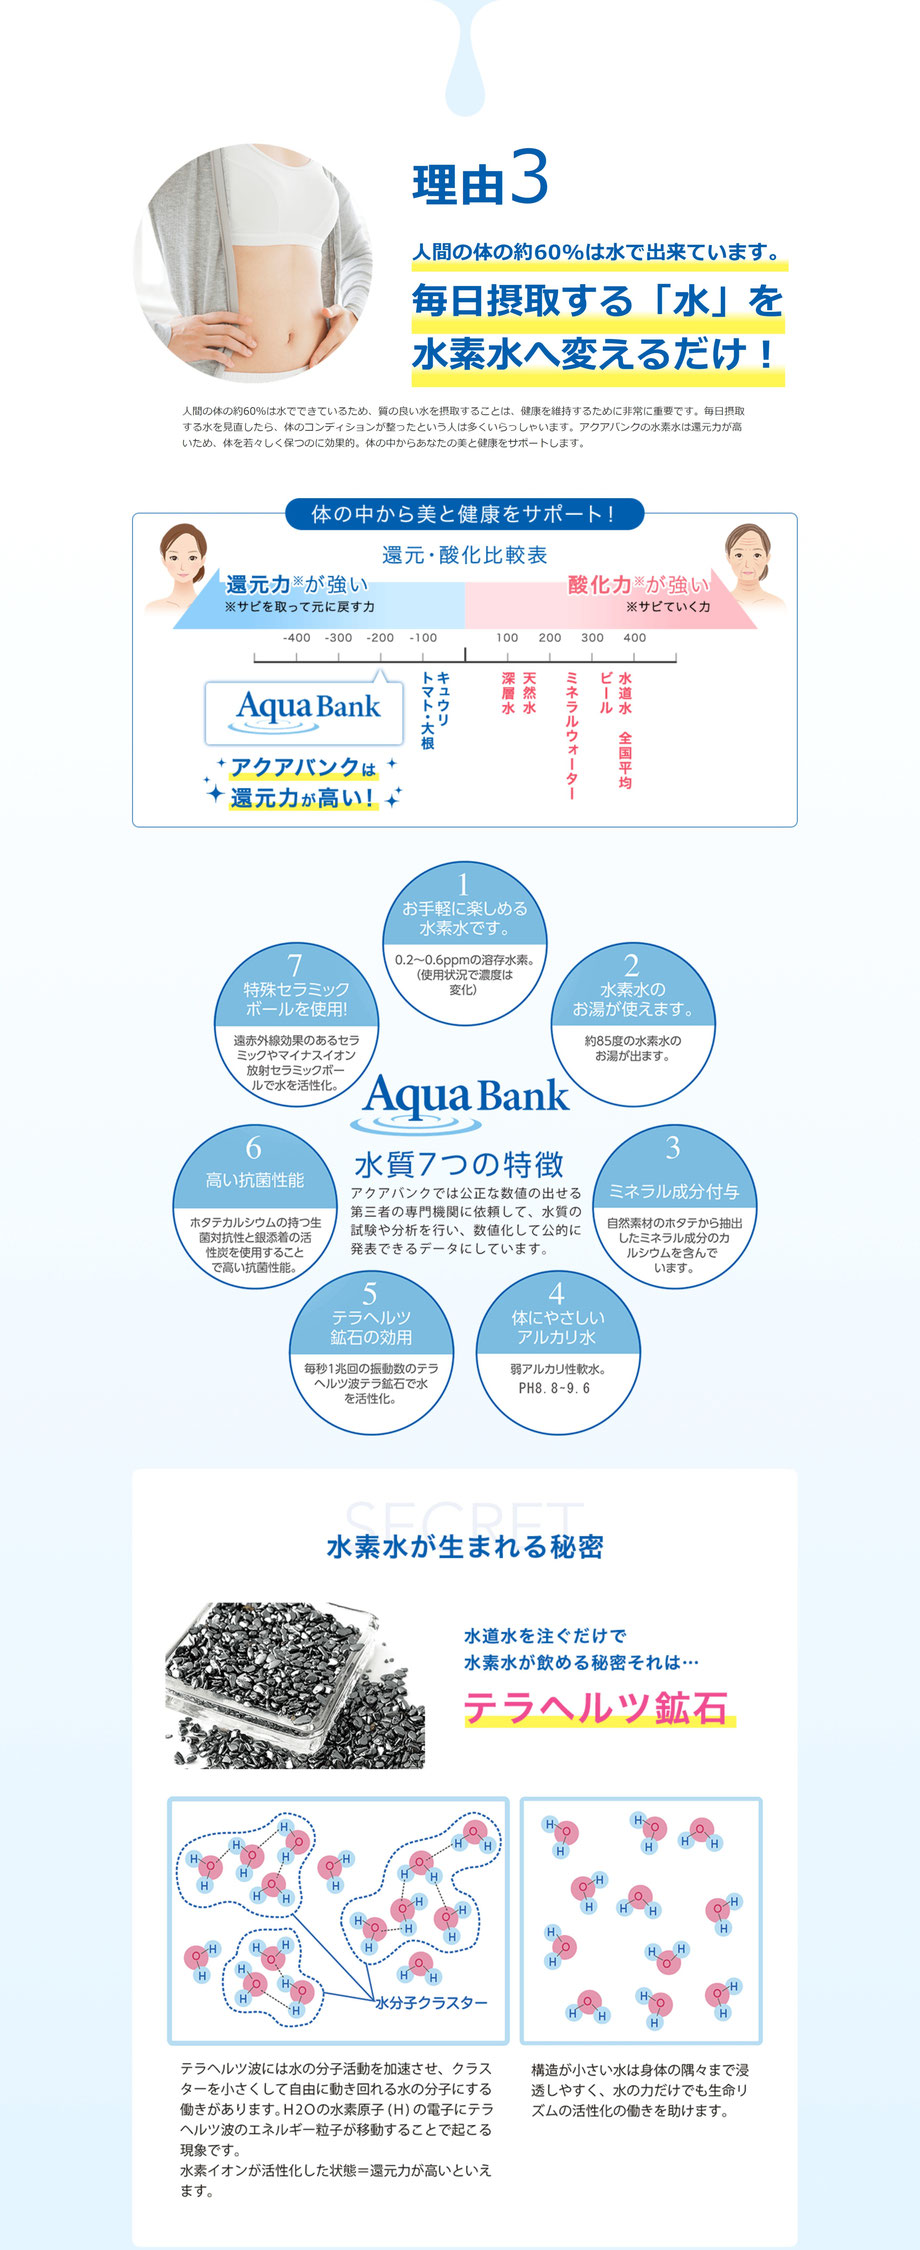 Aquabank Water server アクアバンク ウォーターサーバー